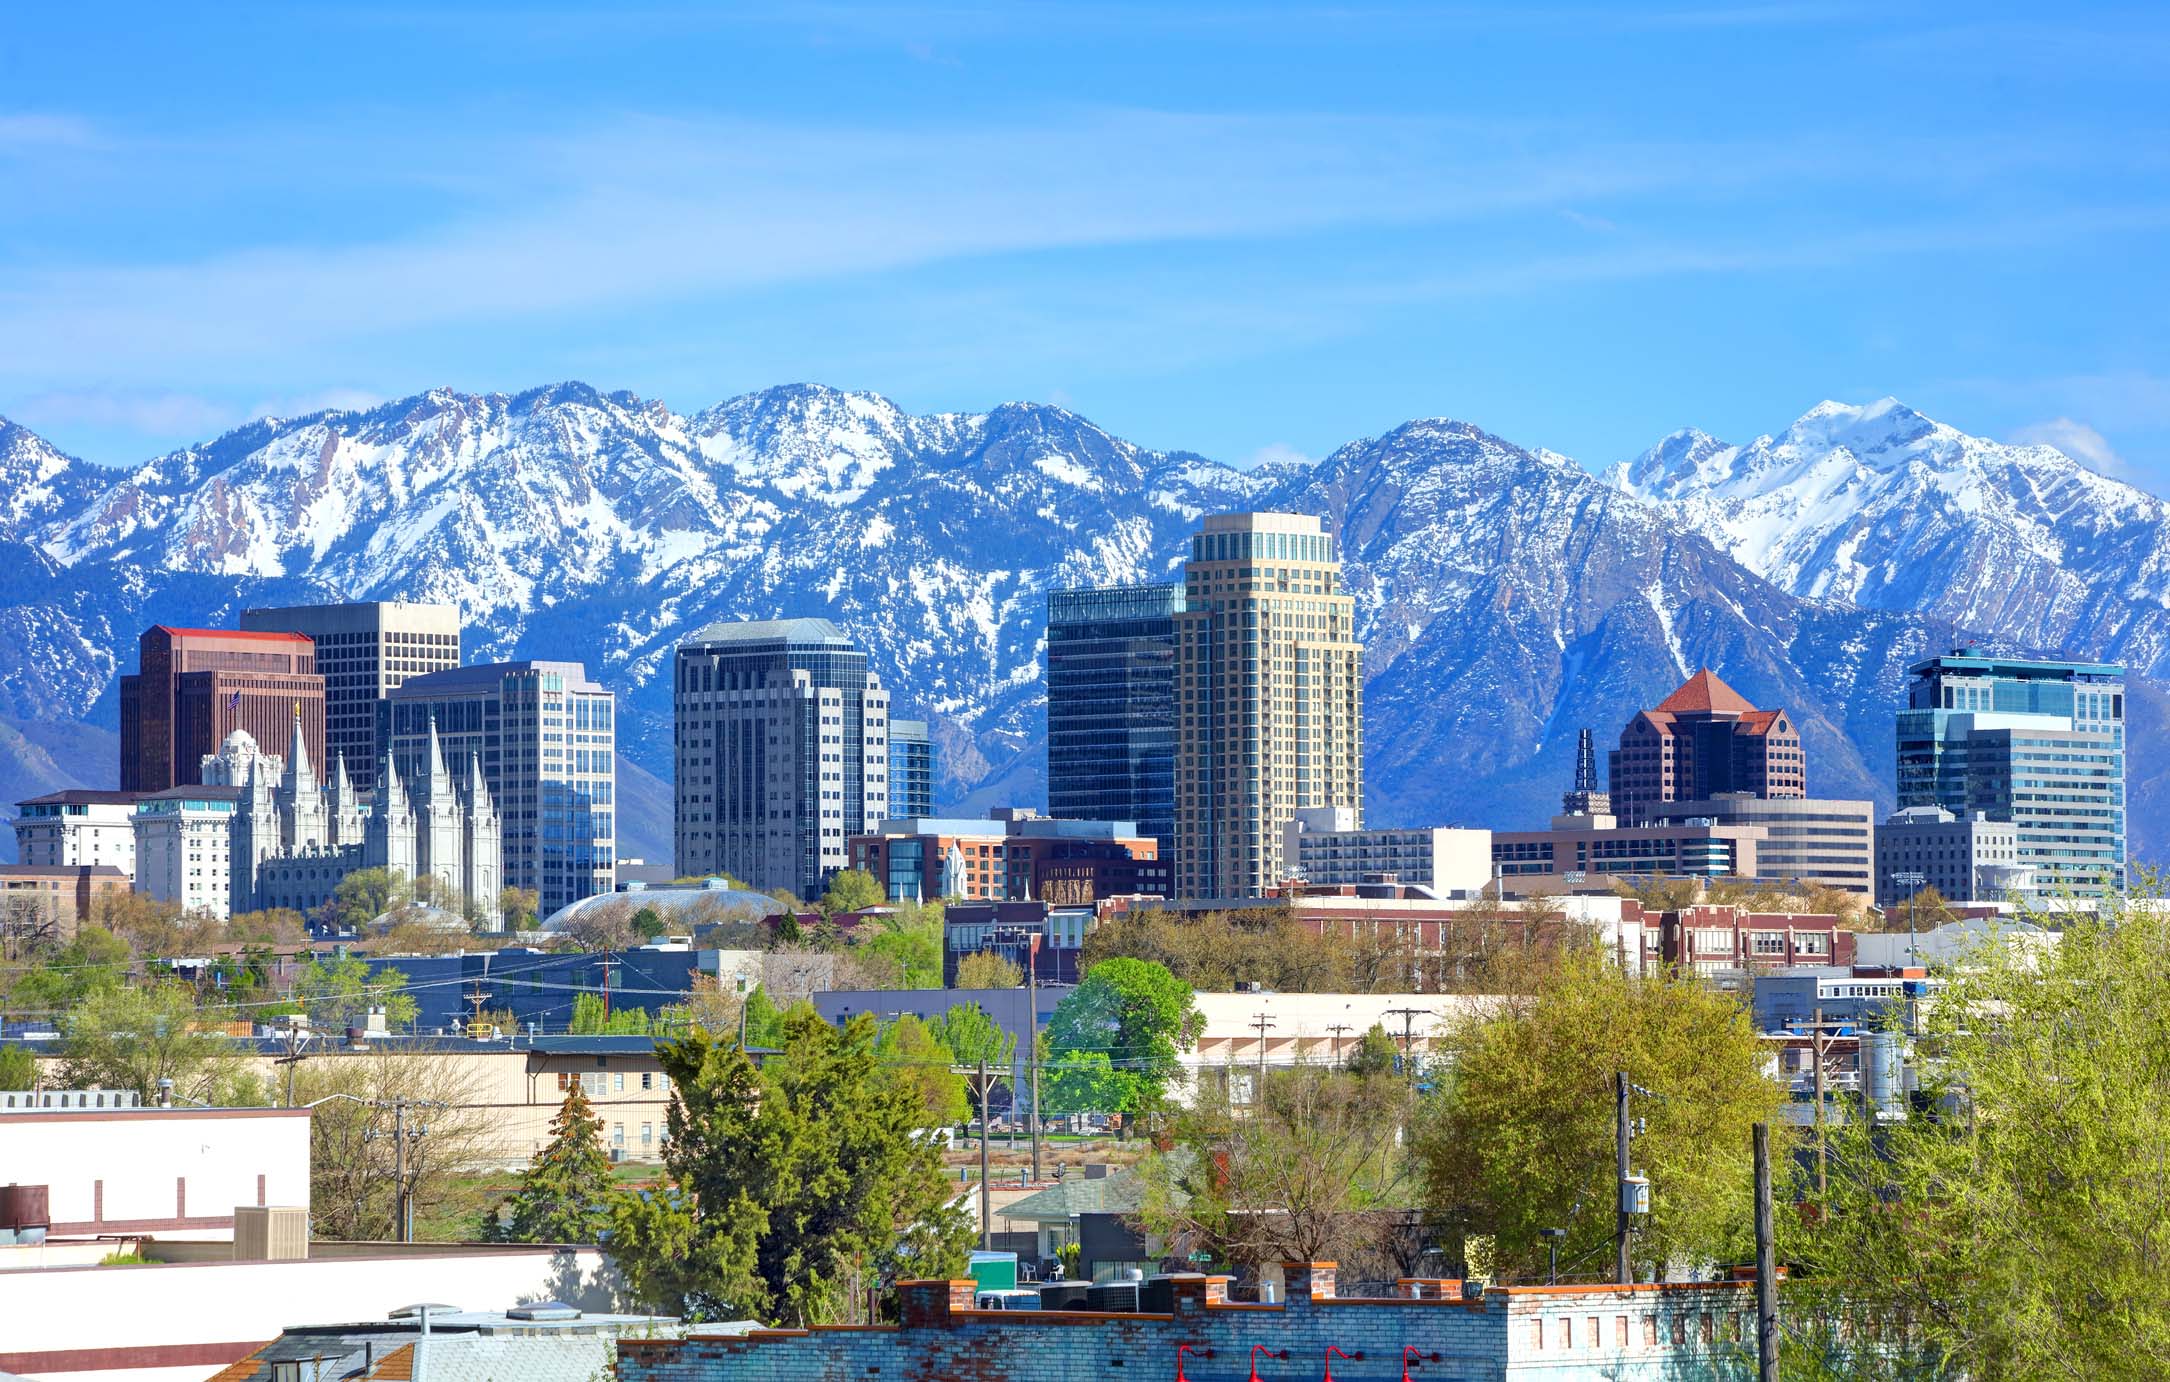 Skyline of Salt Lake City in Utah